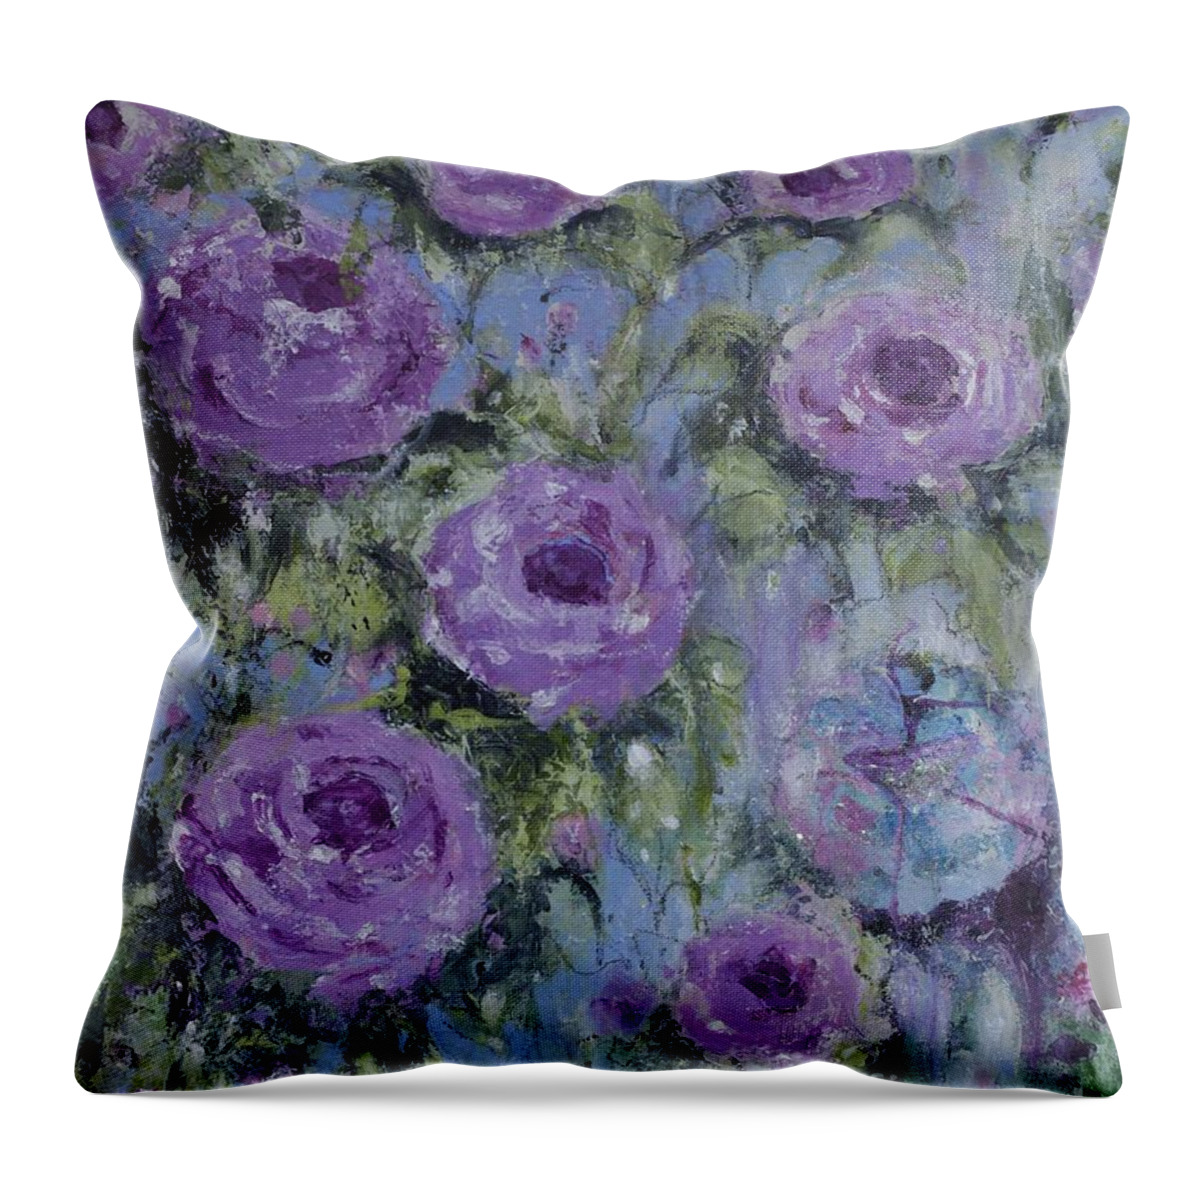 Purple Rose Ballerina Throw Pillow featuring the painting Purple Rose Ballerina by Cherie Salerno